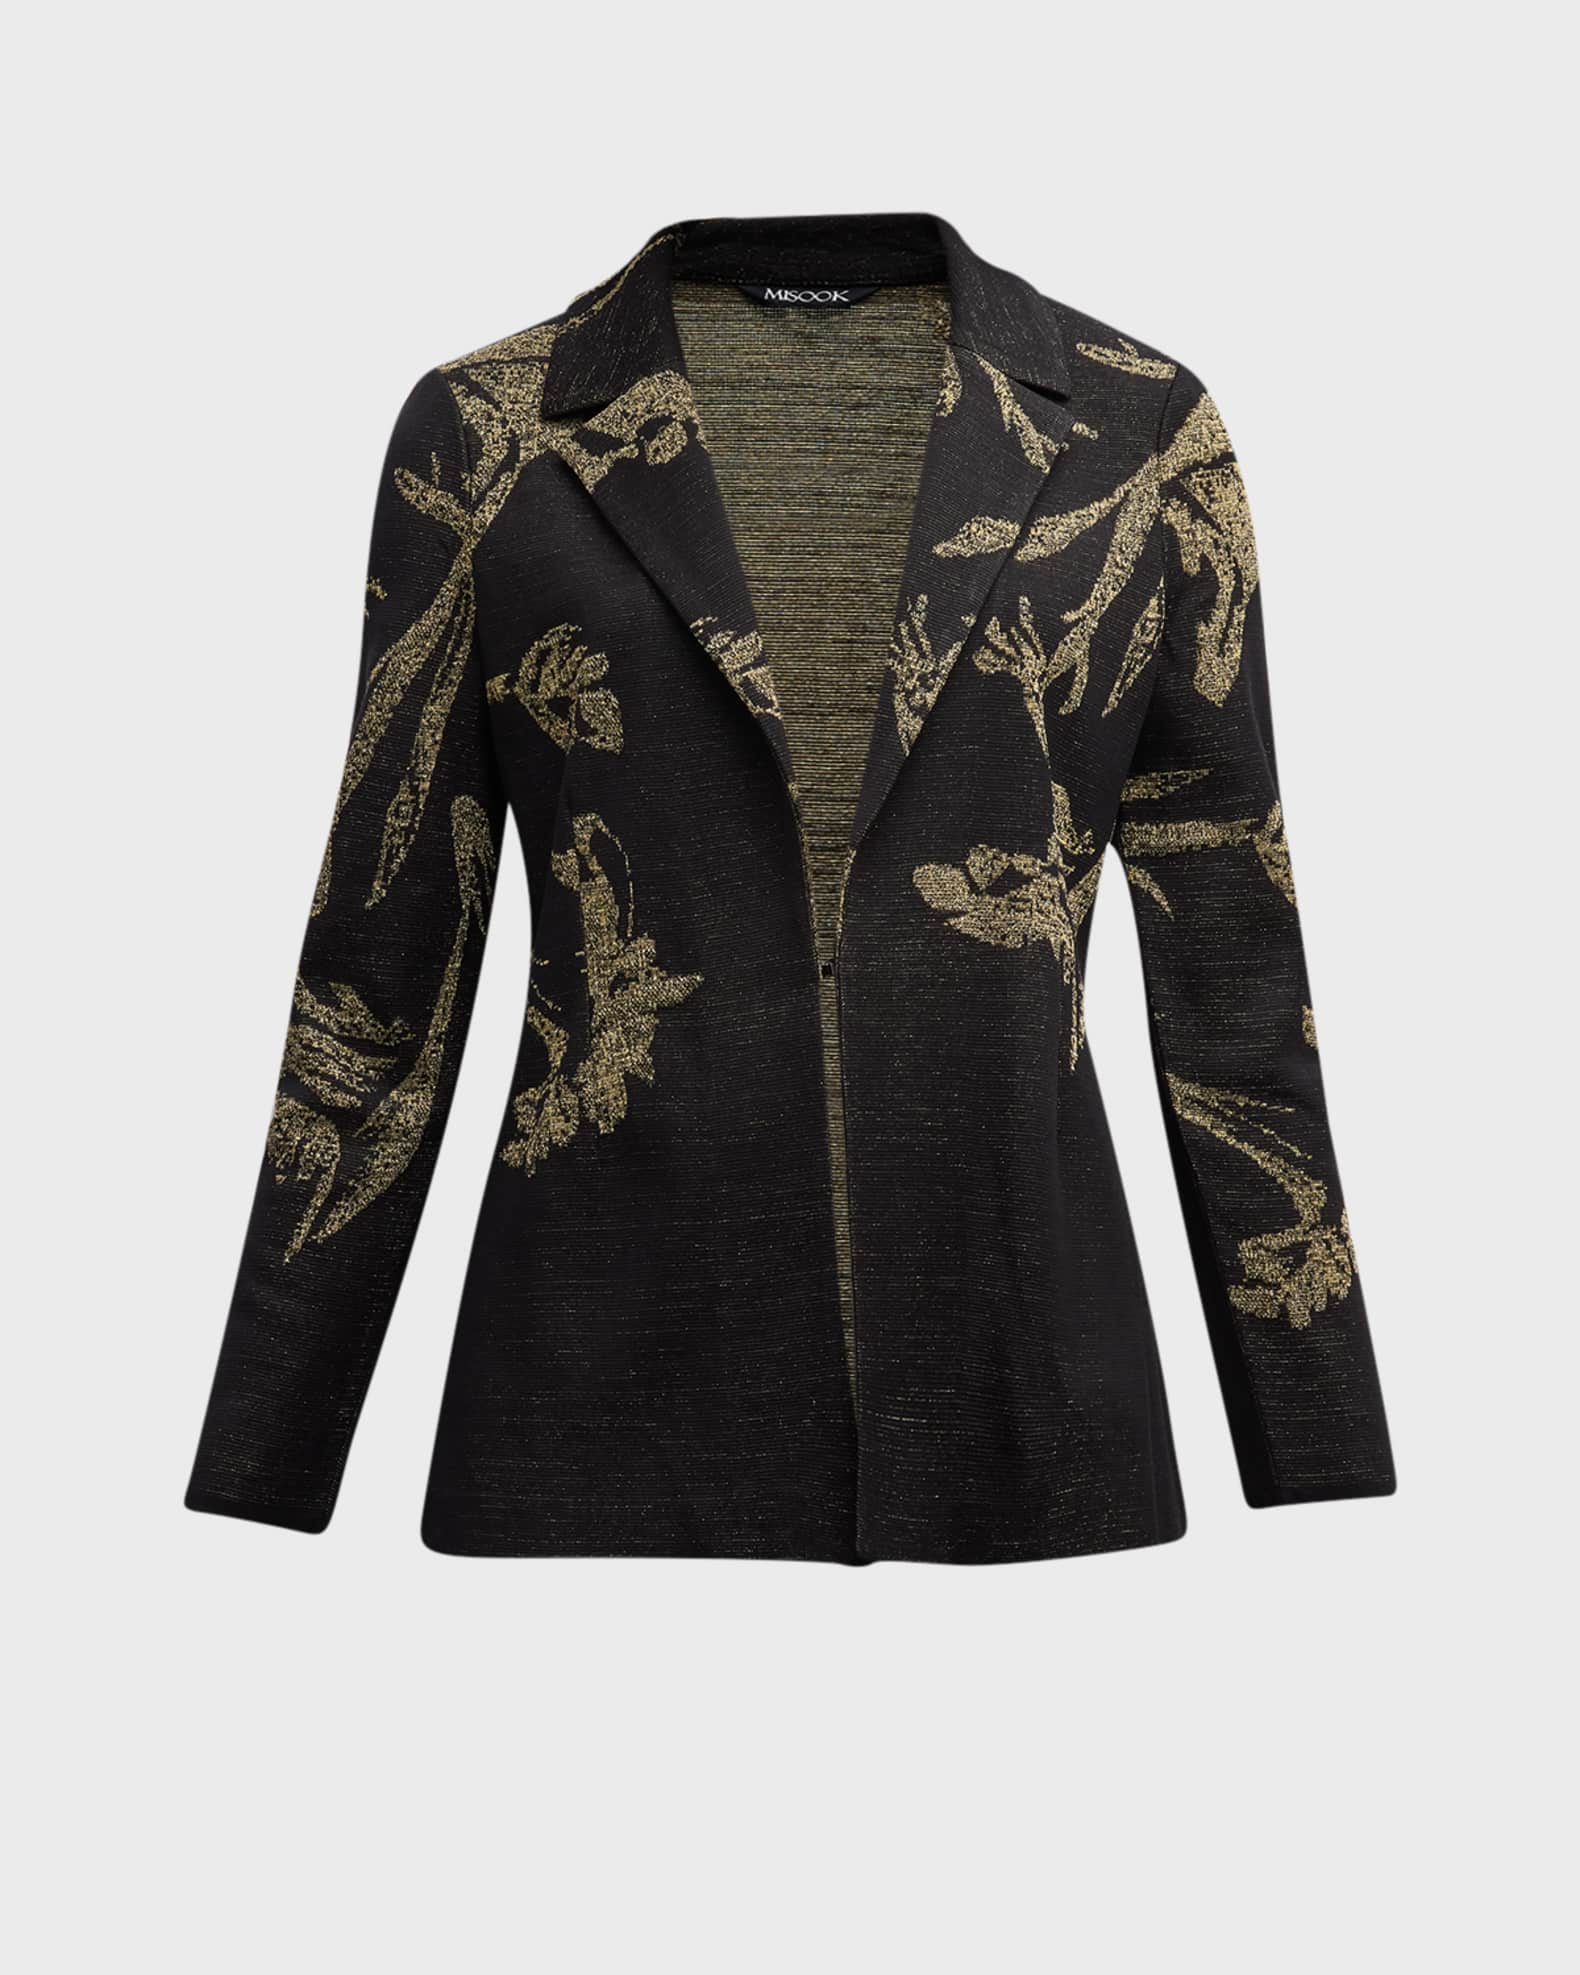 Misook Tailored Floral Jacquard Knit Jacket | Neiman Marcus